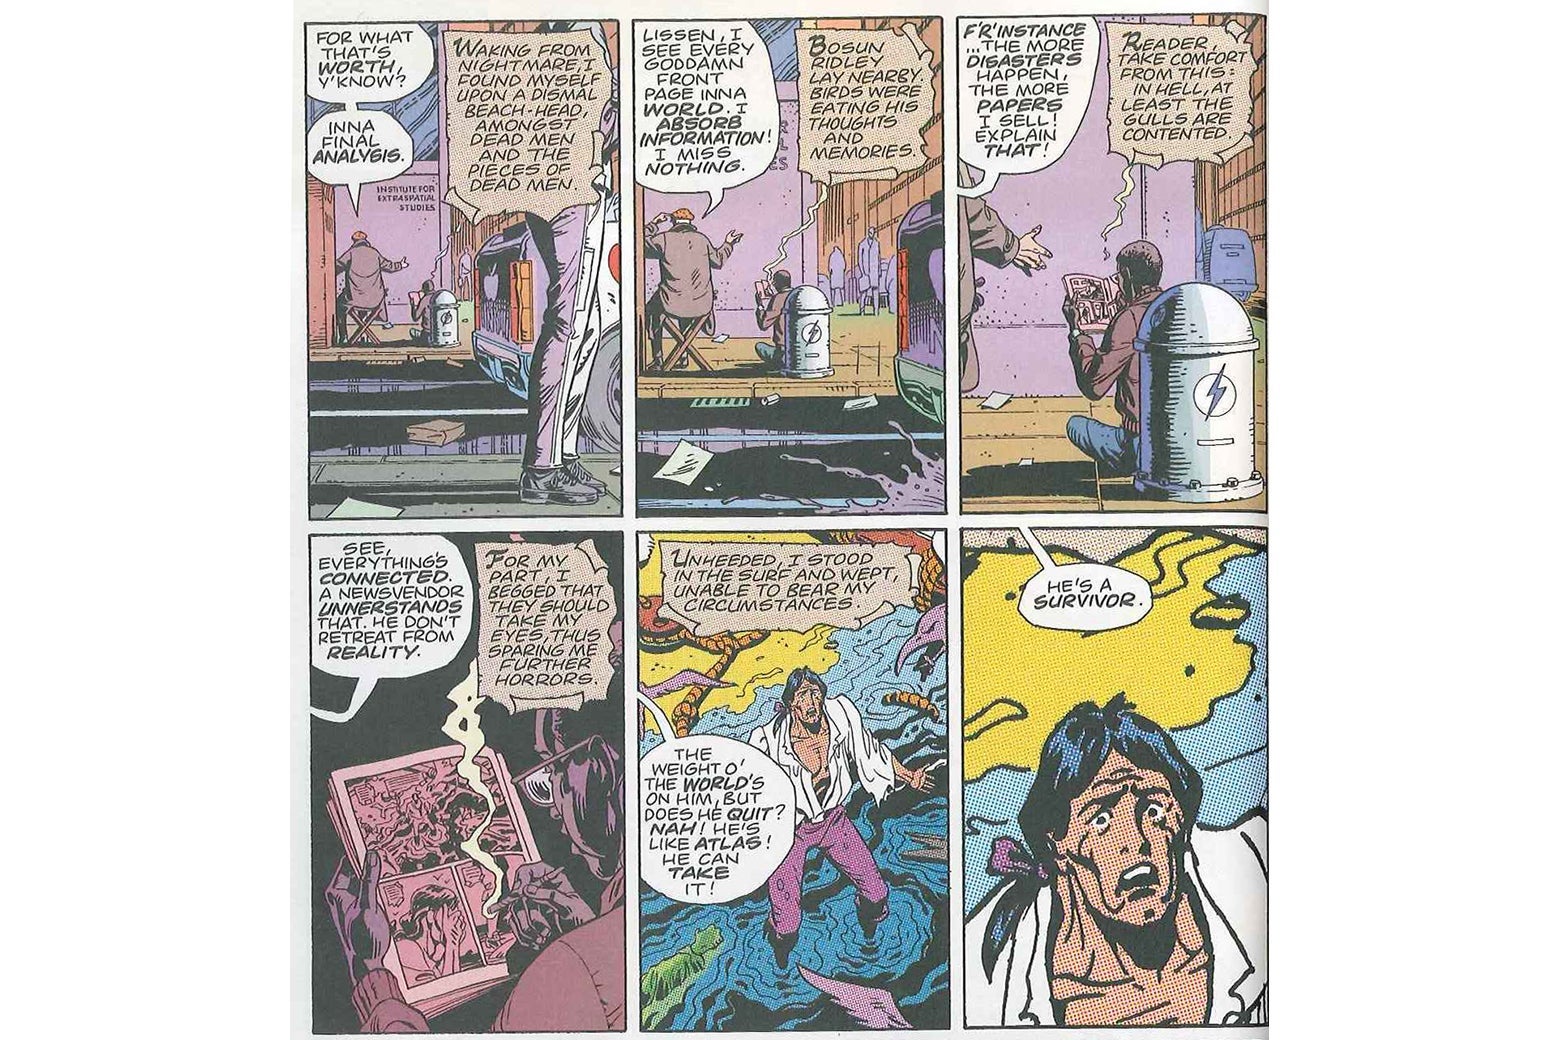 Six panels from Watchmen, intercutting between a pirate comic book and a newsvendor rambling.